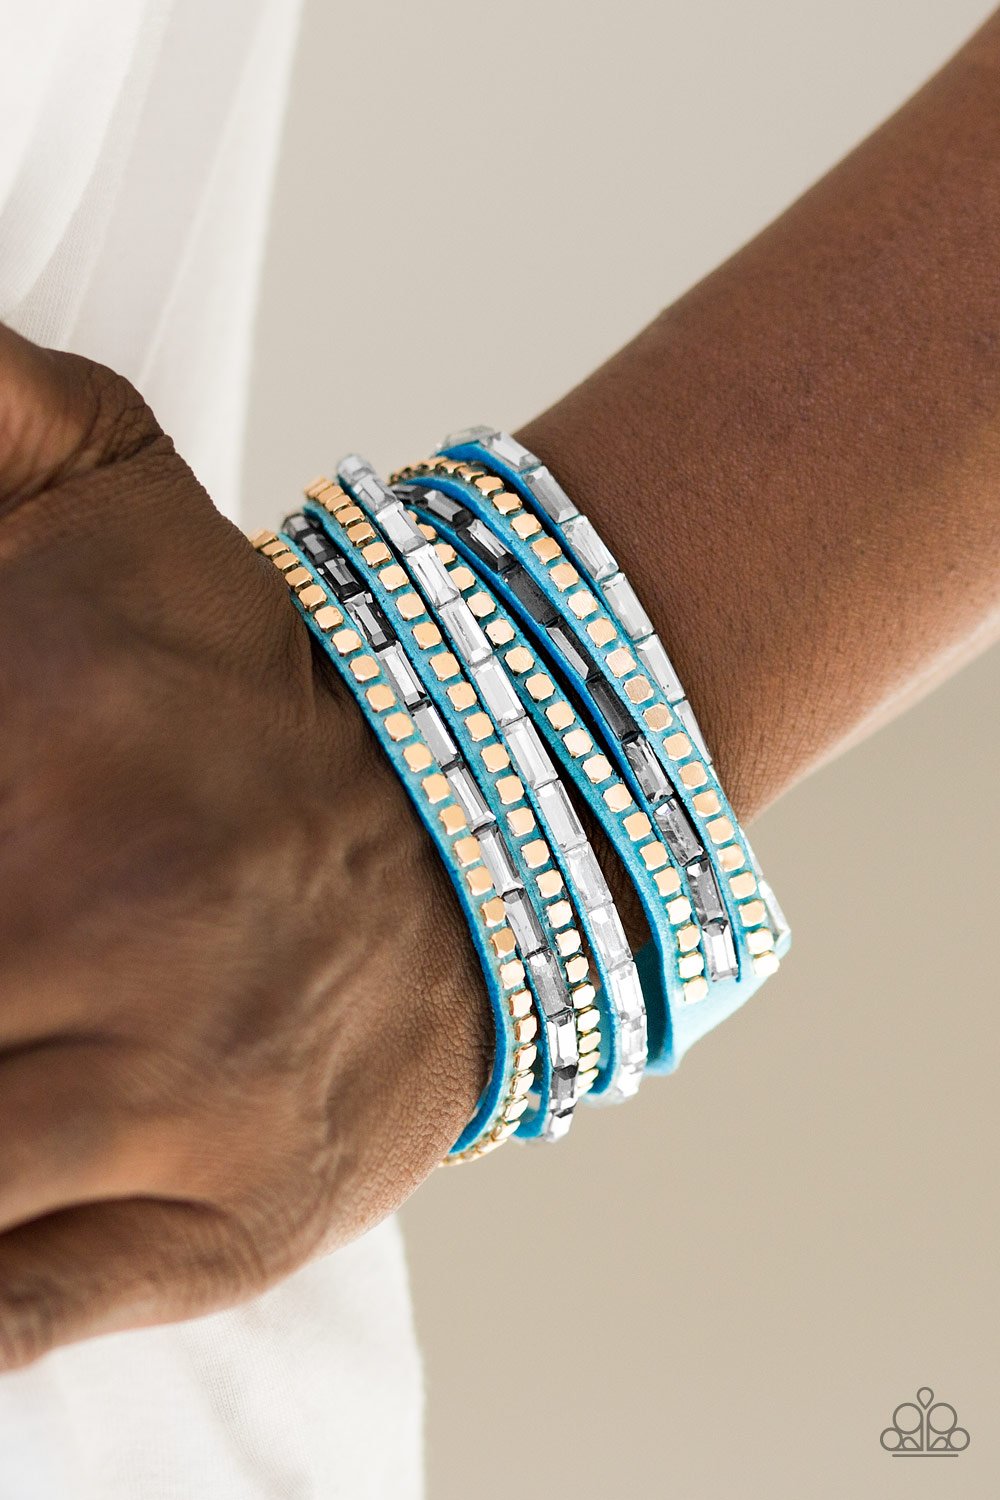 This Time With Attitude - Blue wrap bracelet